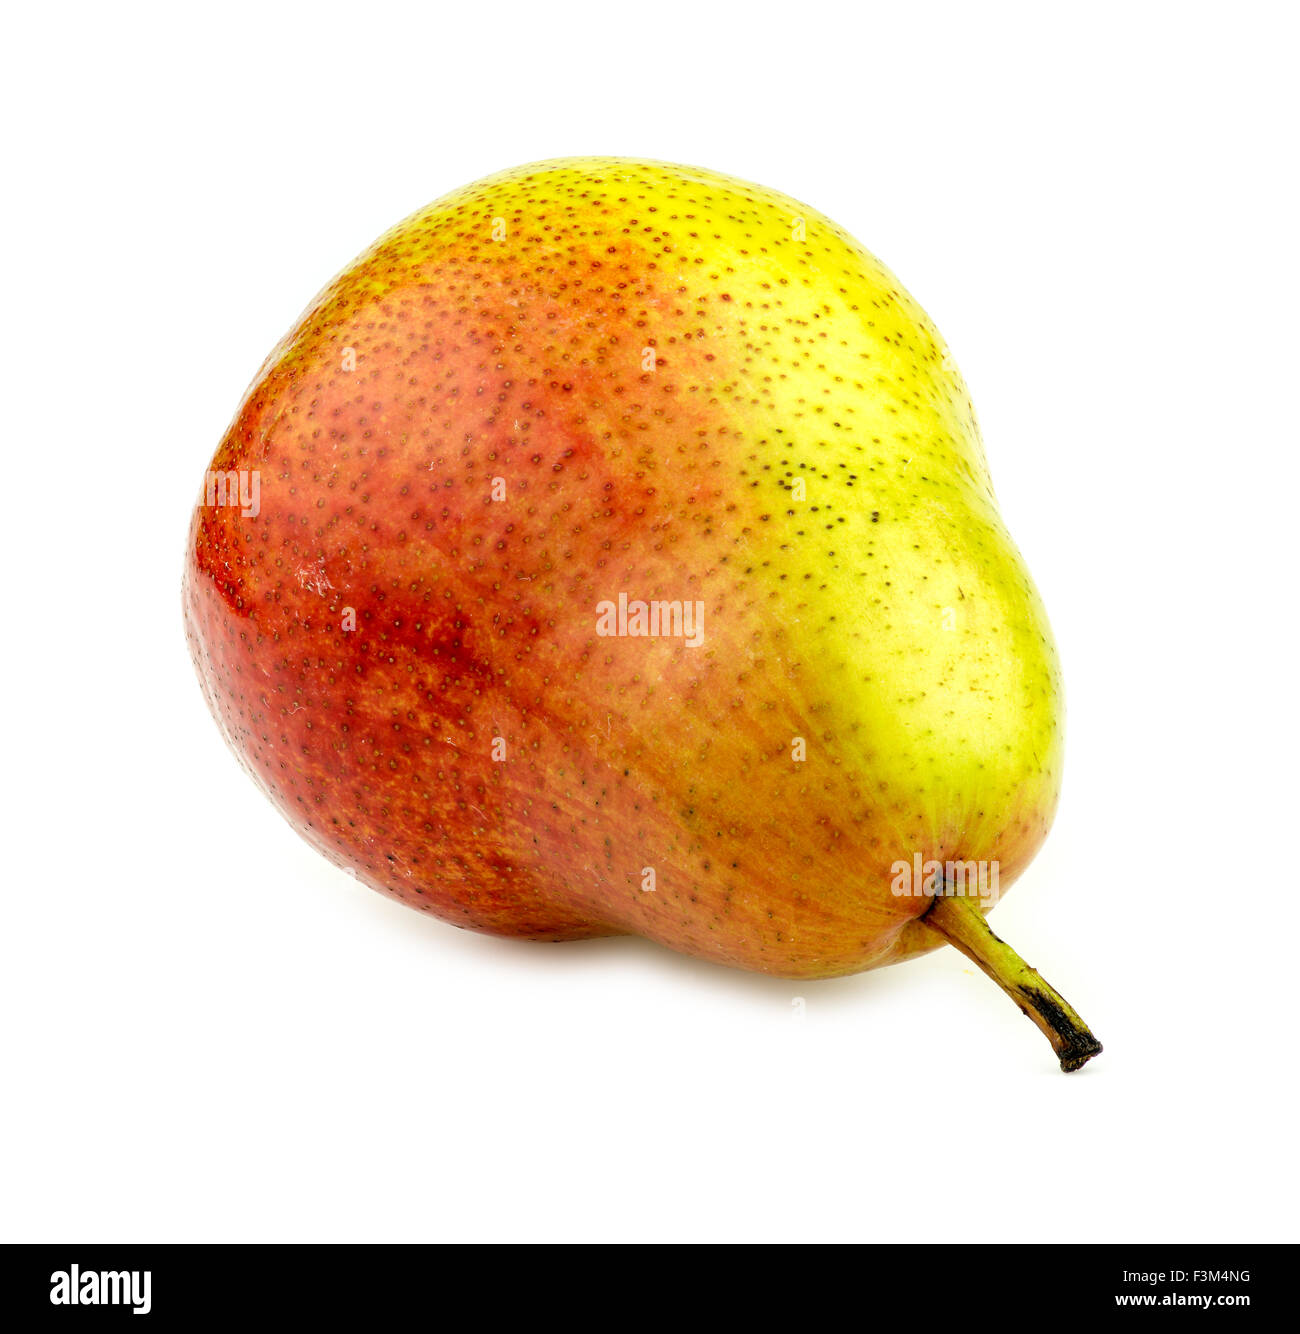 Tasty corella pear lying on its side Stock Photo